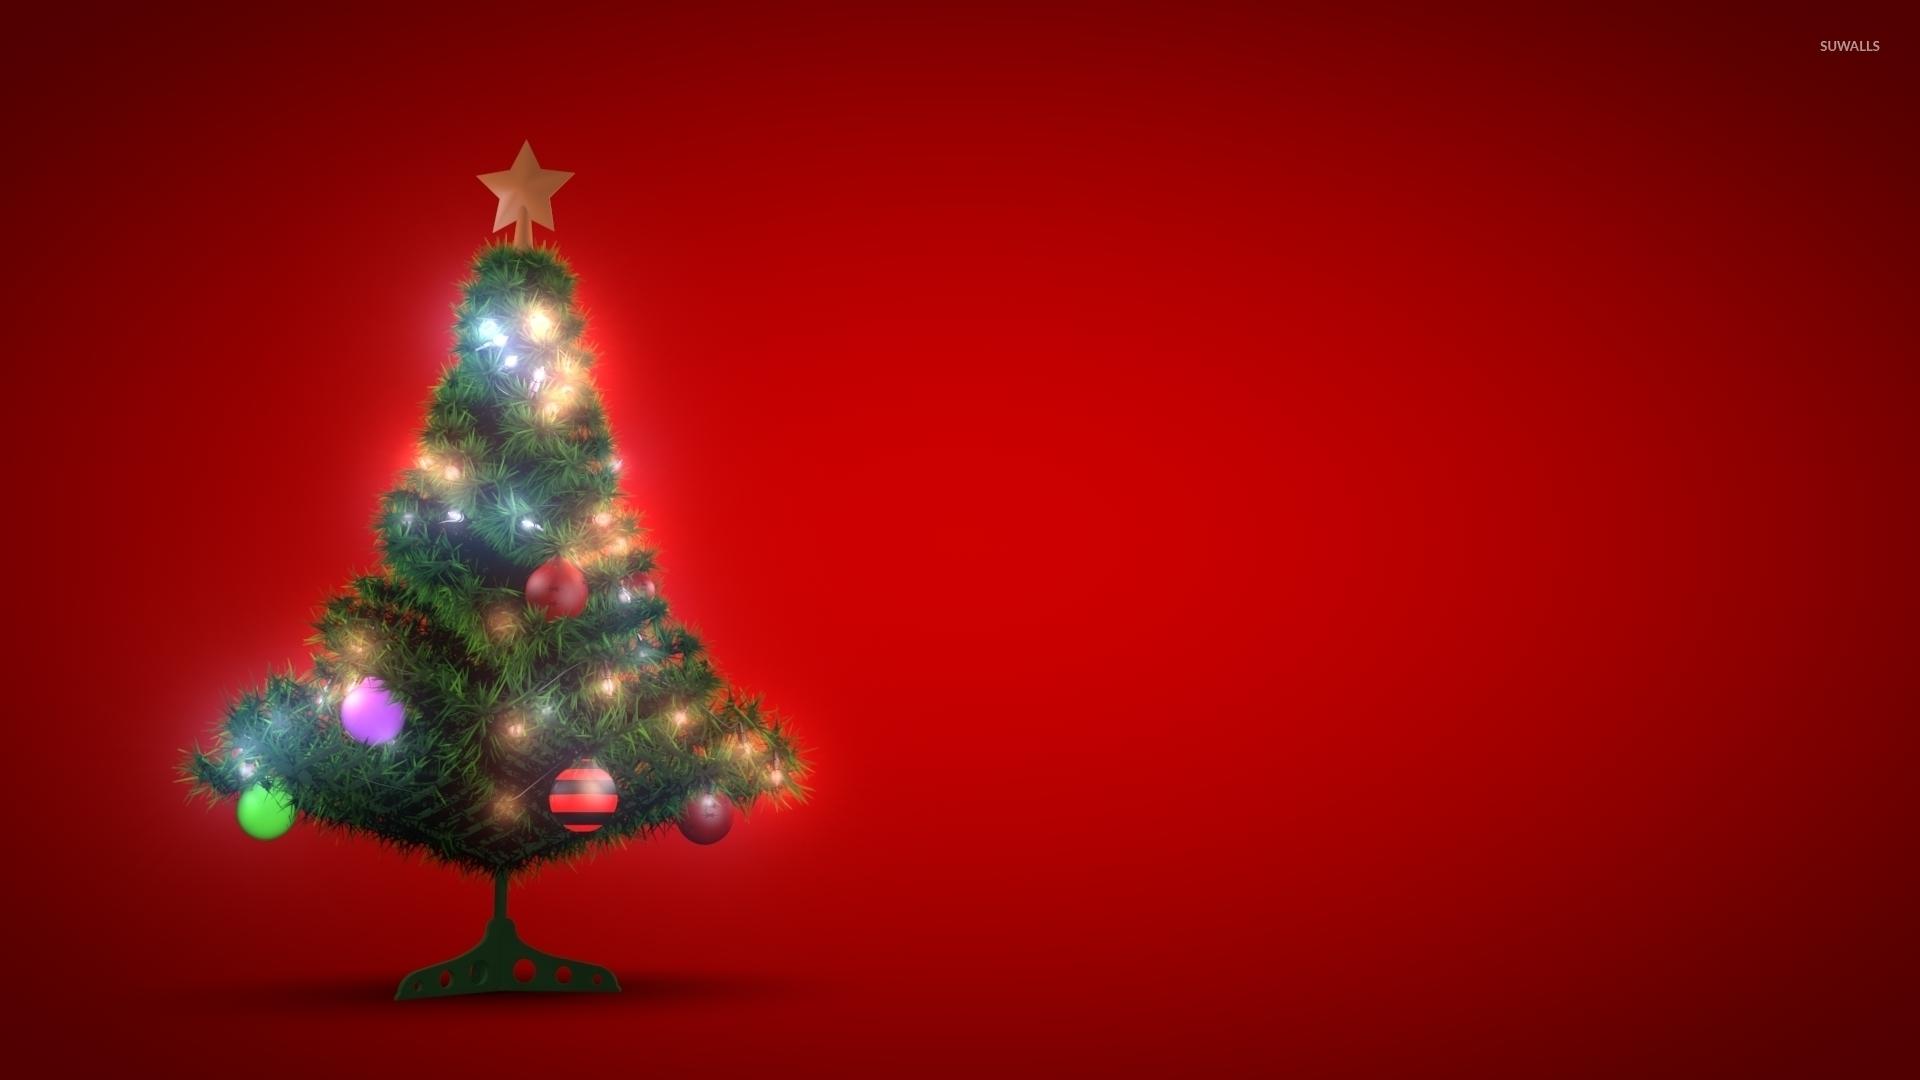 Merry Christmas Tree Wallpaper free download. PixelsTalk